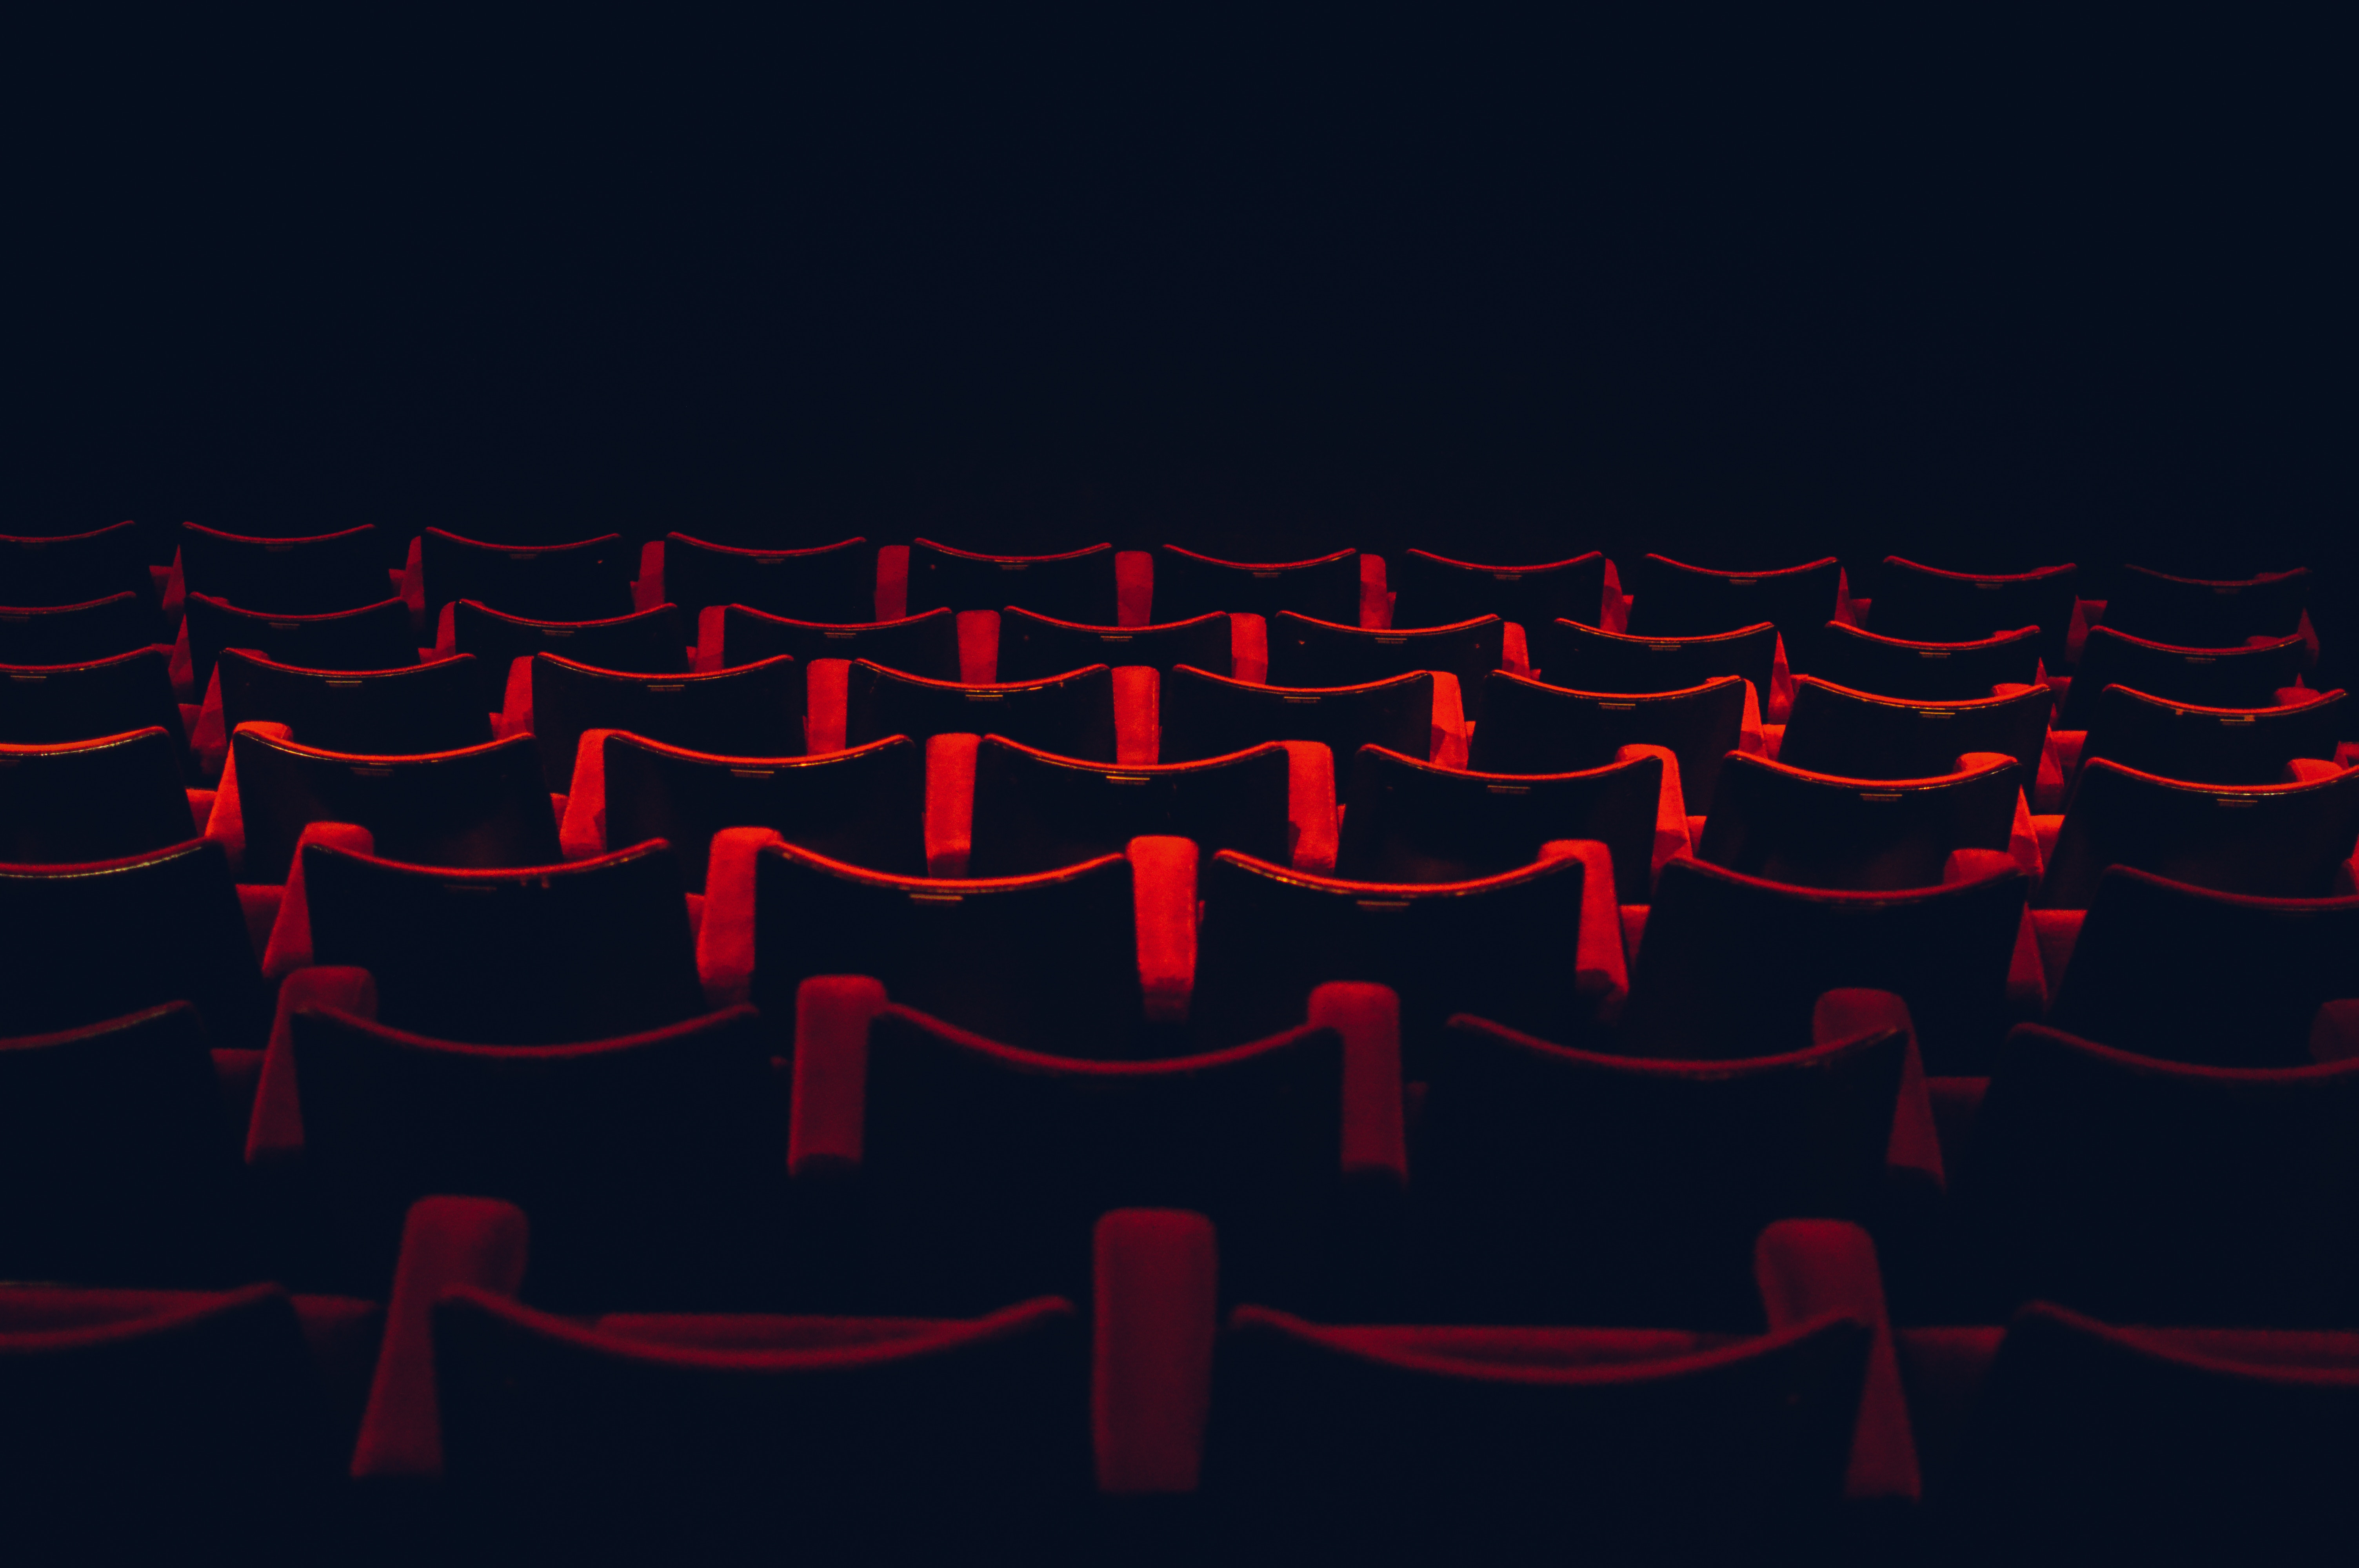 6016x4000 #dark room, #seat, #theater, #Creative Commons image, # cinema room, #velvet chairs, #red, #darkness, #sofa, #repetition, #cinema, # theatre, #room, #red chairs, #cinema seats, #chair, #dark, #seats, #movie, #seating, #repetitive